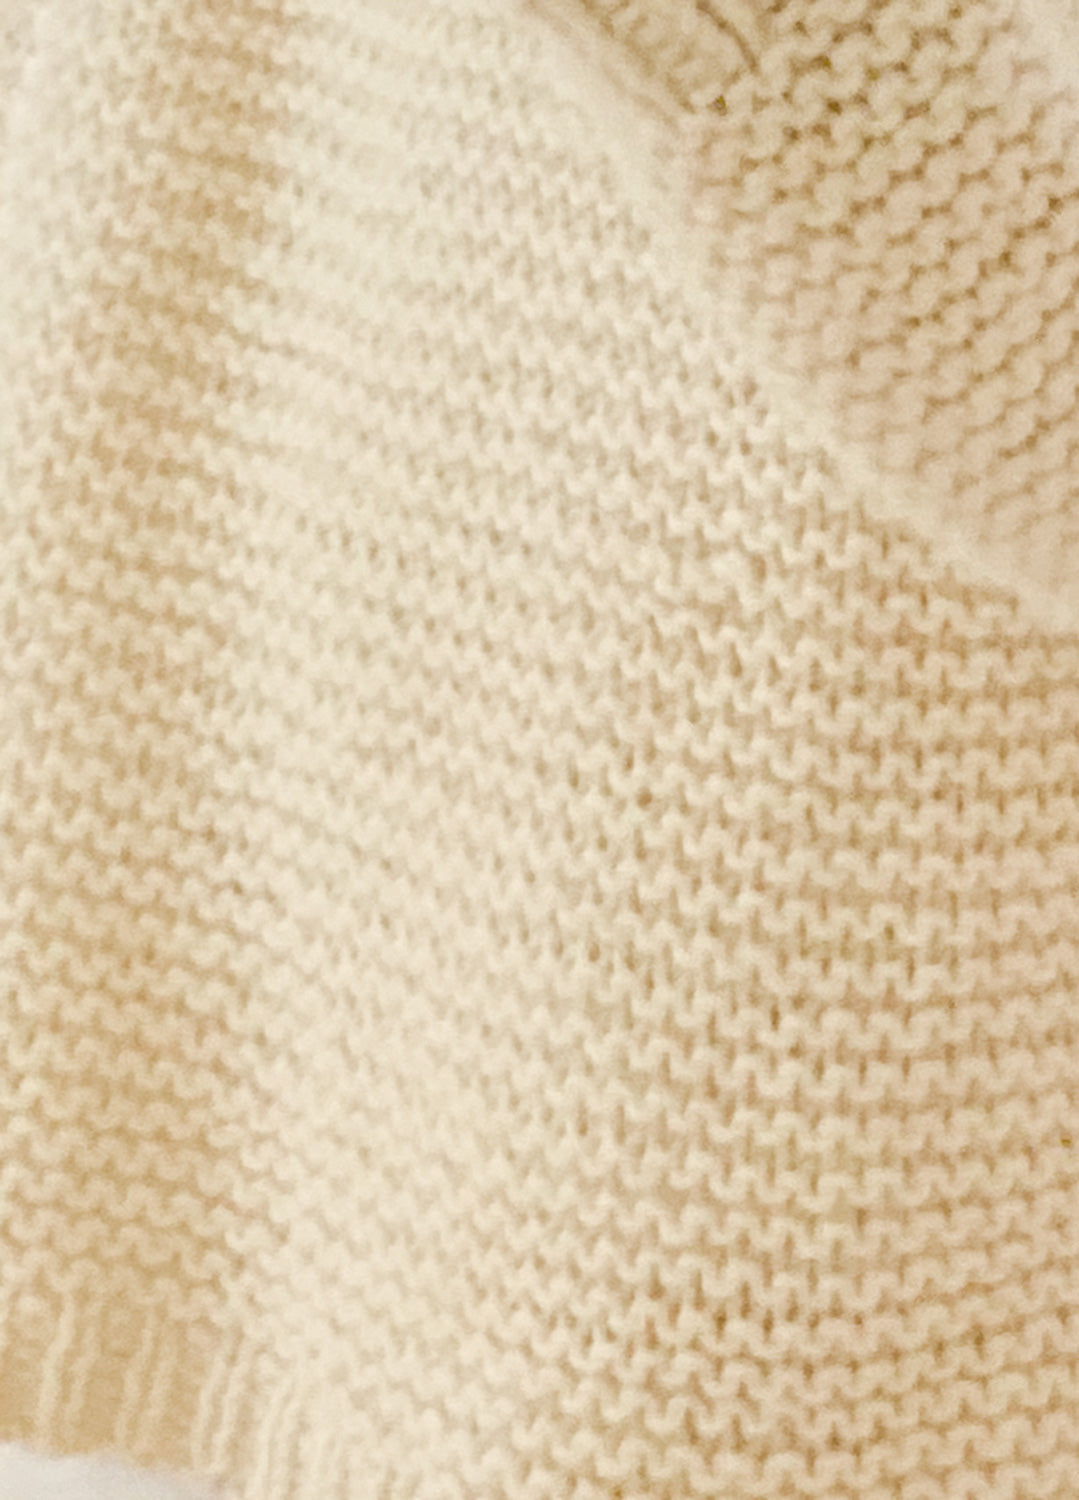 Classic Sweater Kit